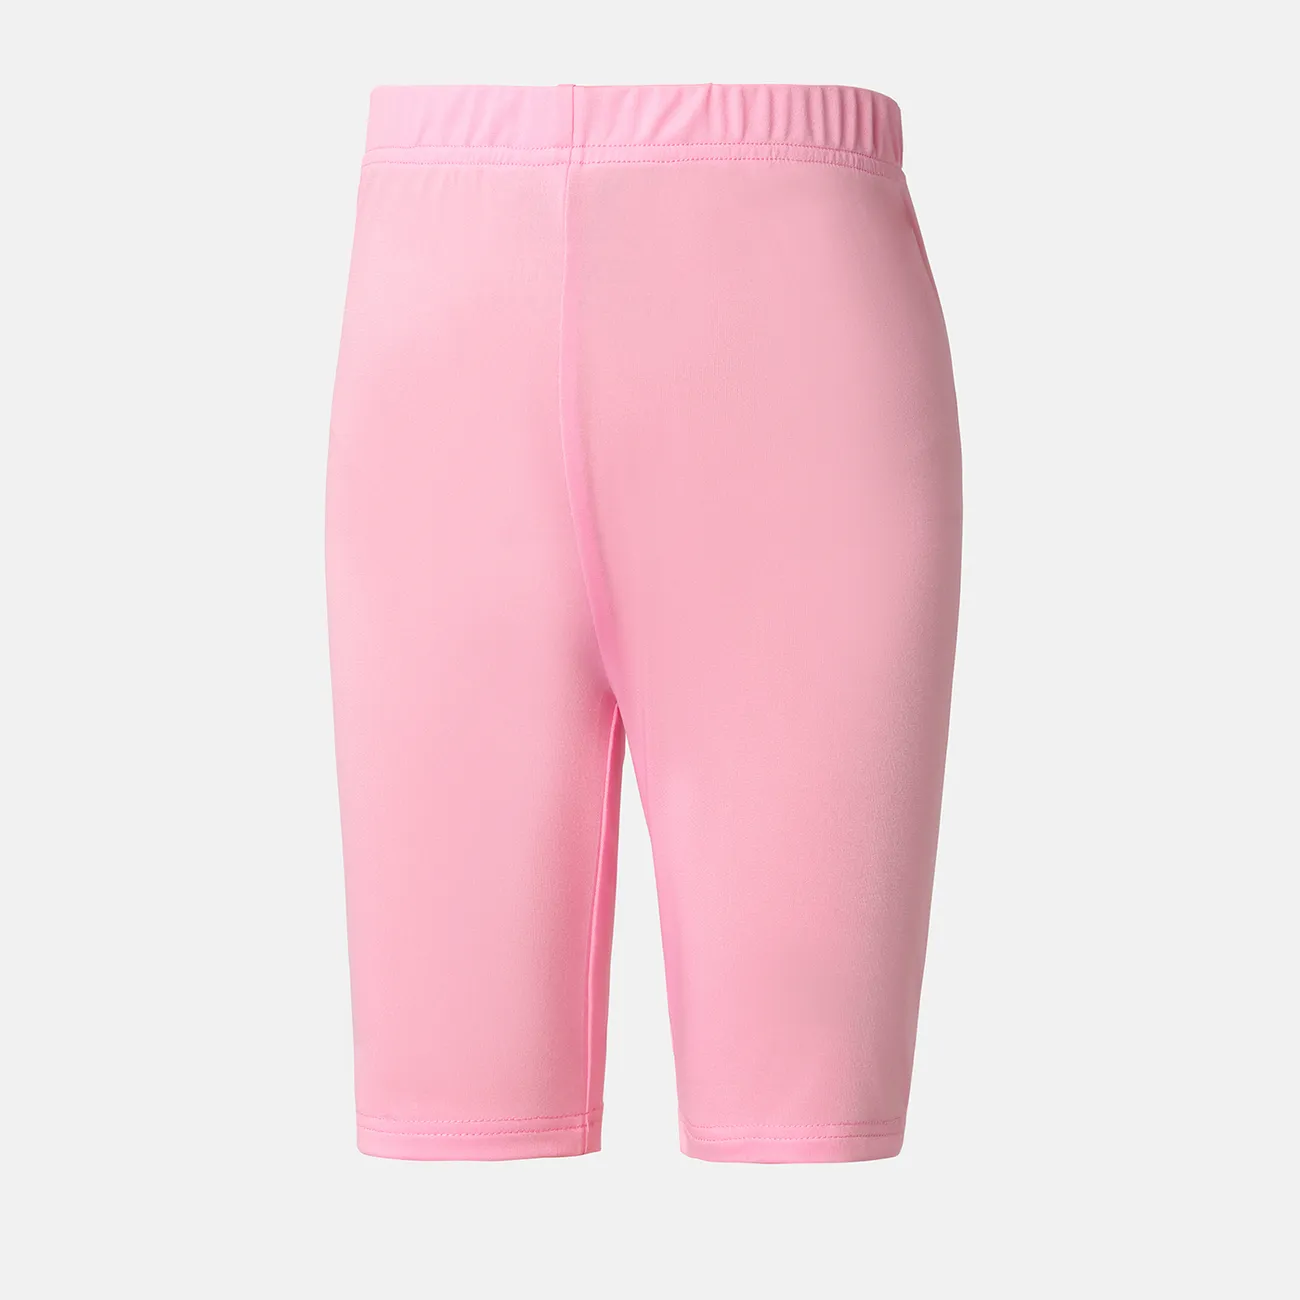 Kid Girl Solid Color Elasticized Leggings Shorts Pink big image 1